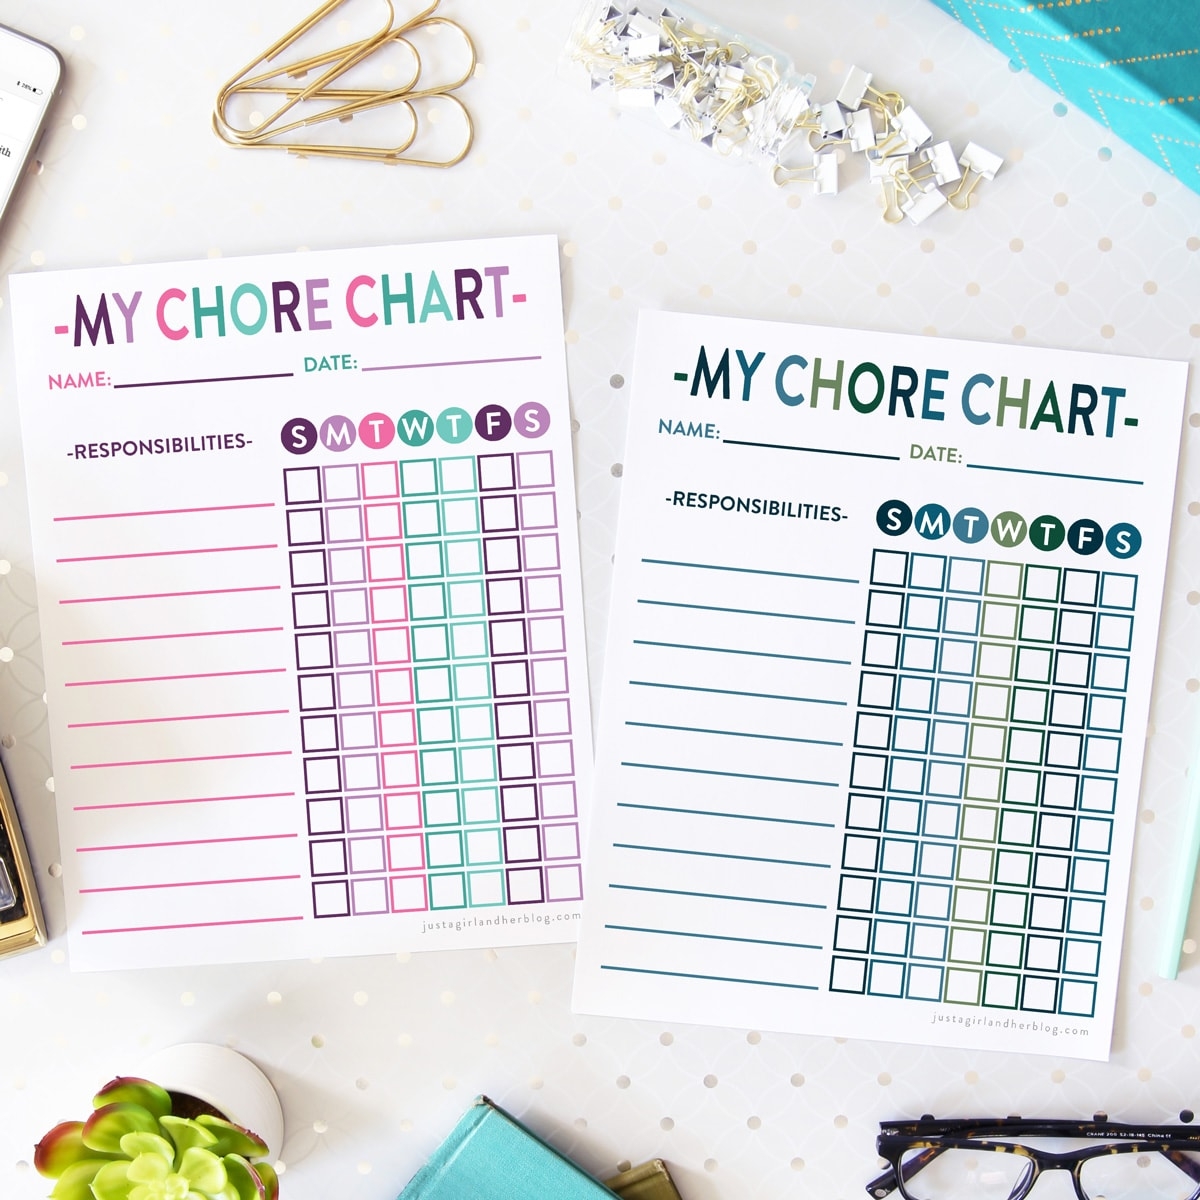 Free Printable Chore Charts To Help Kids Get Organized - Free Printable Chore Chart Ideas